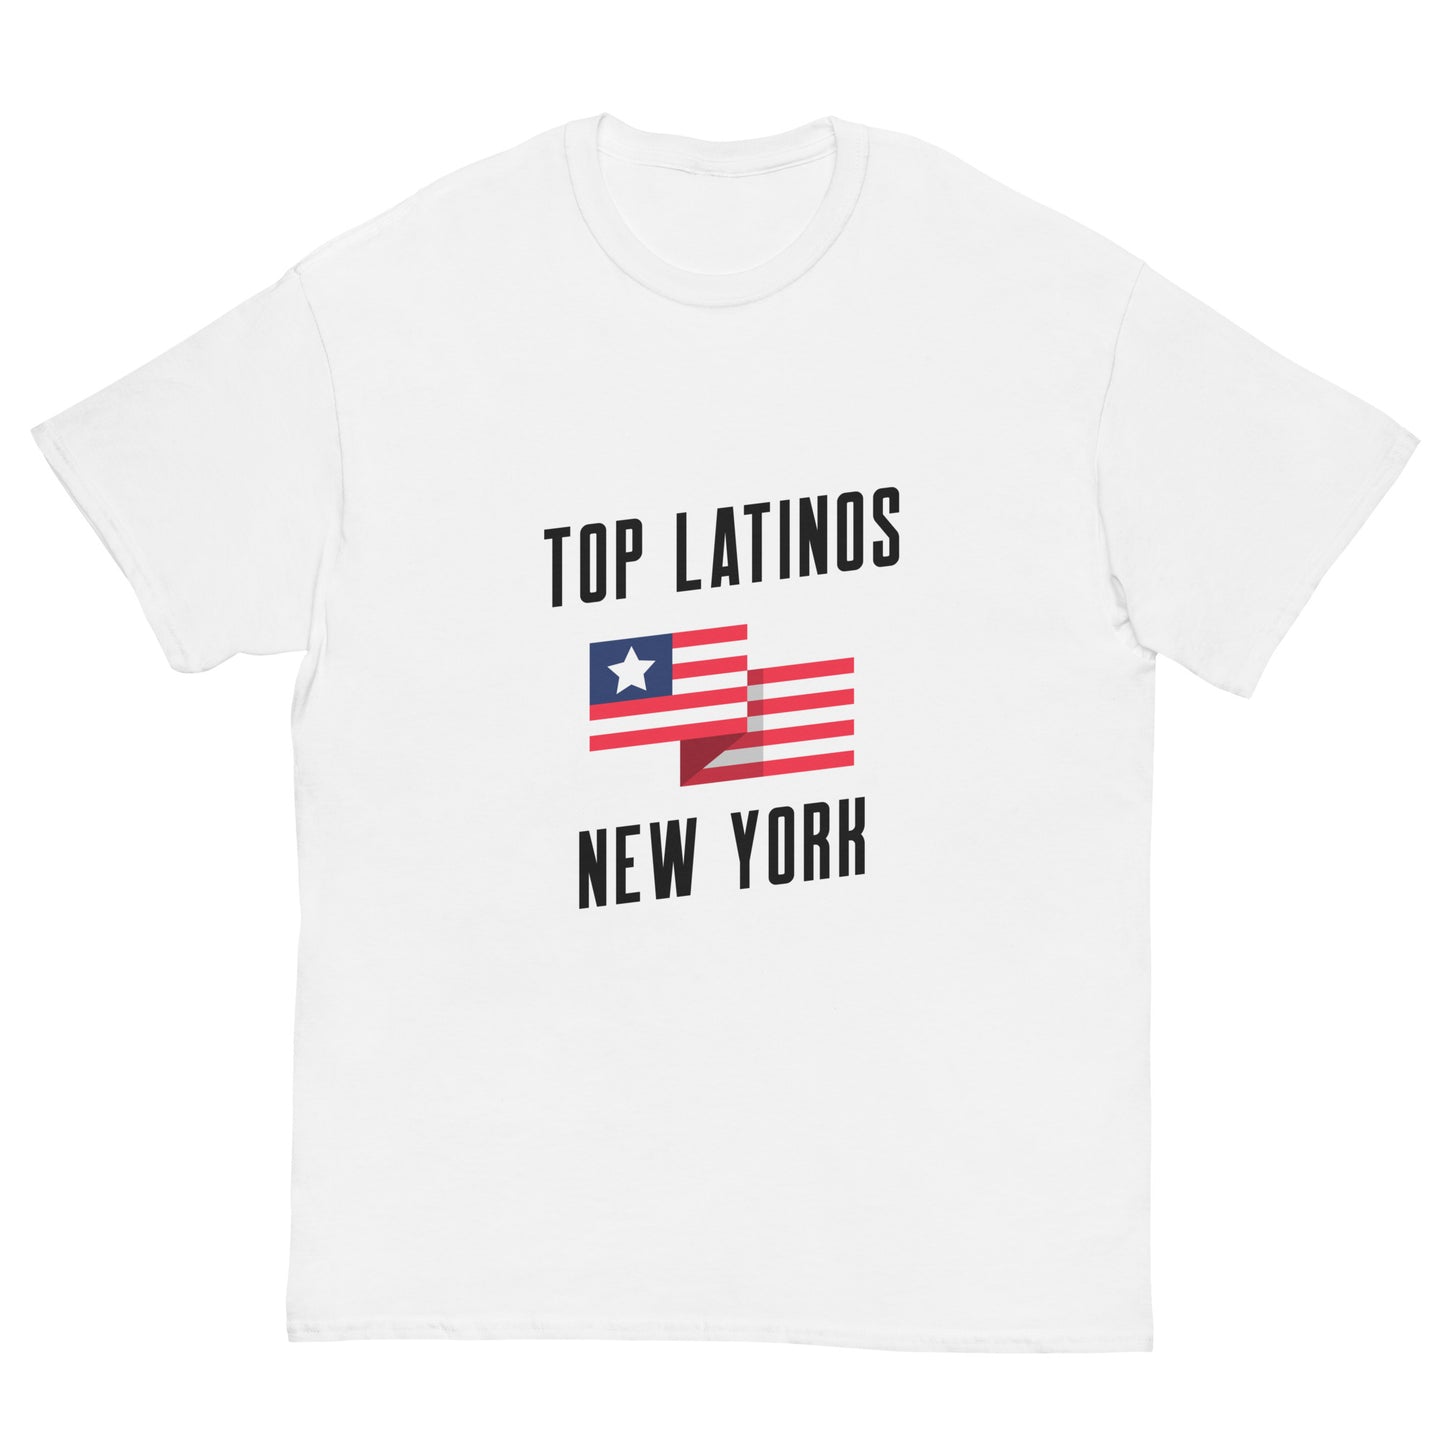 Top Latinos New York classic tee